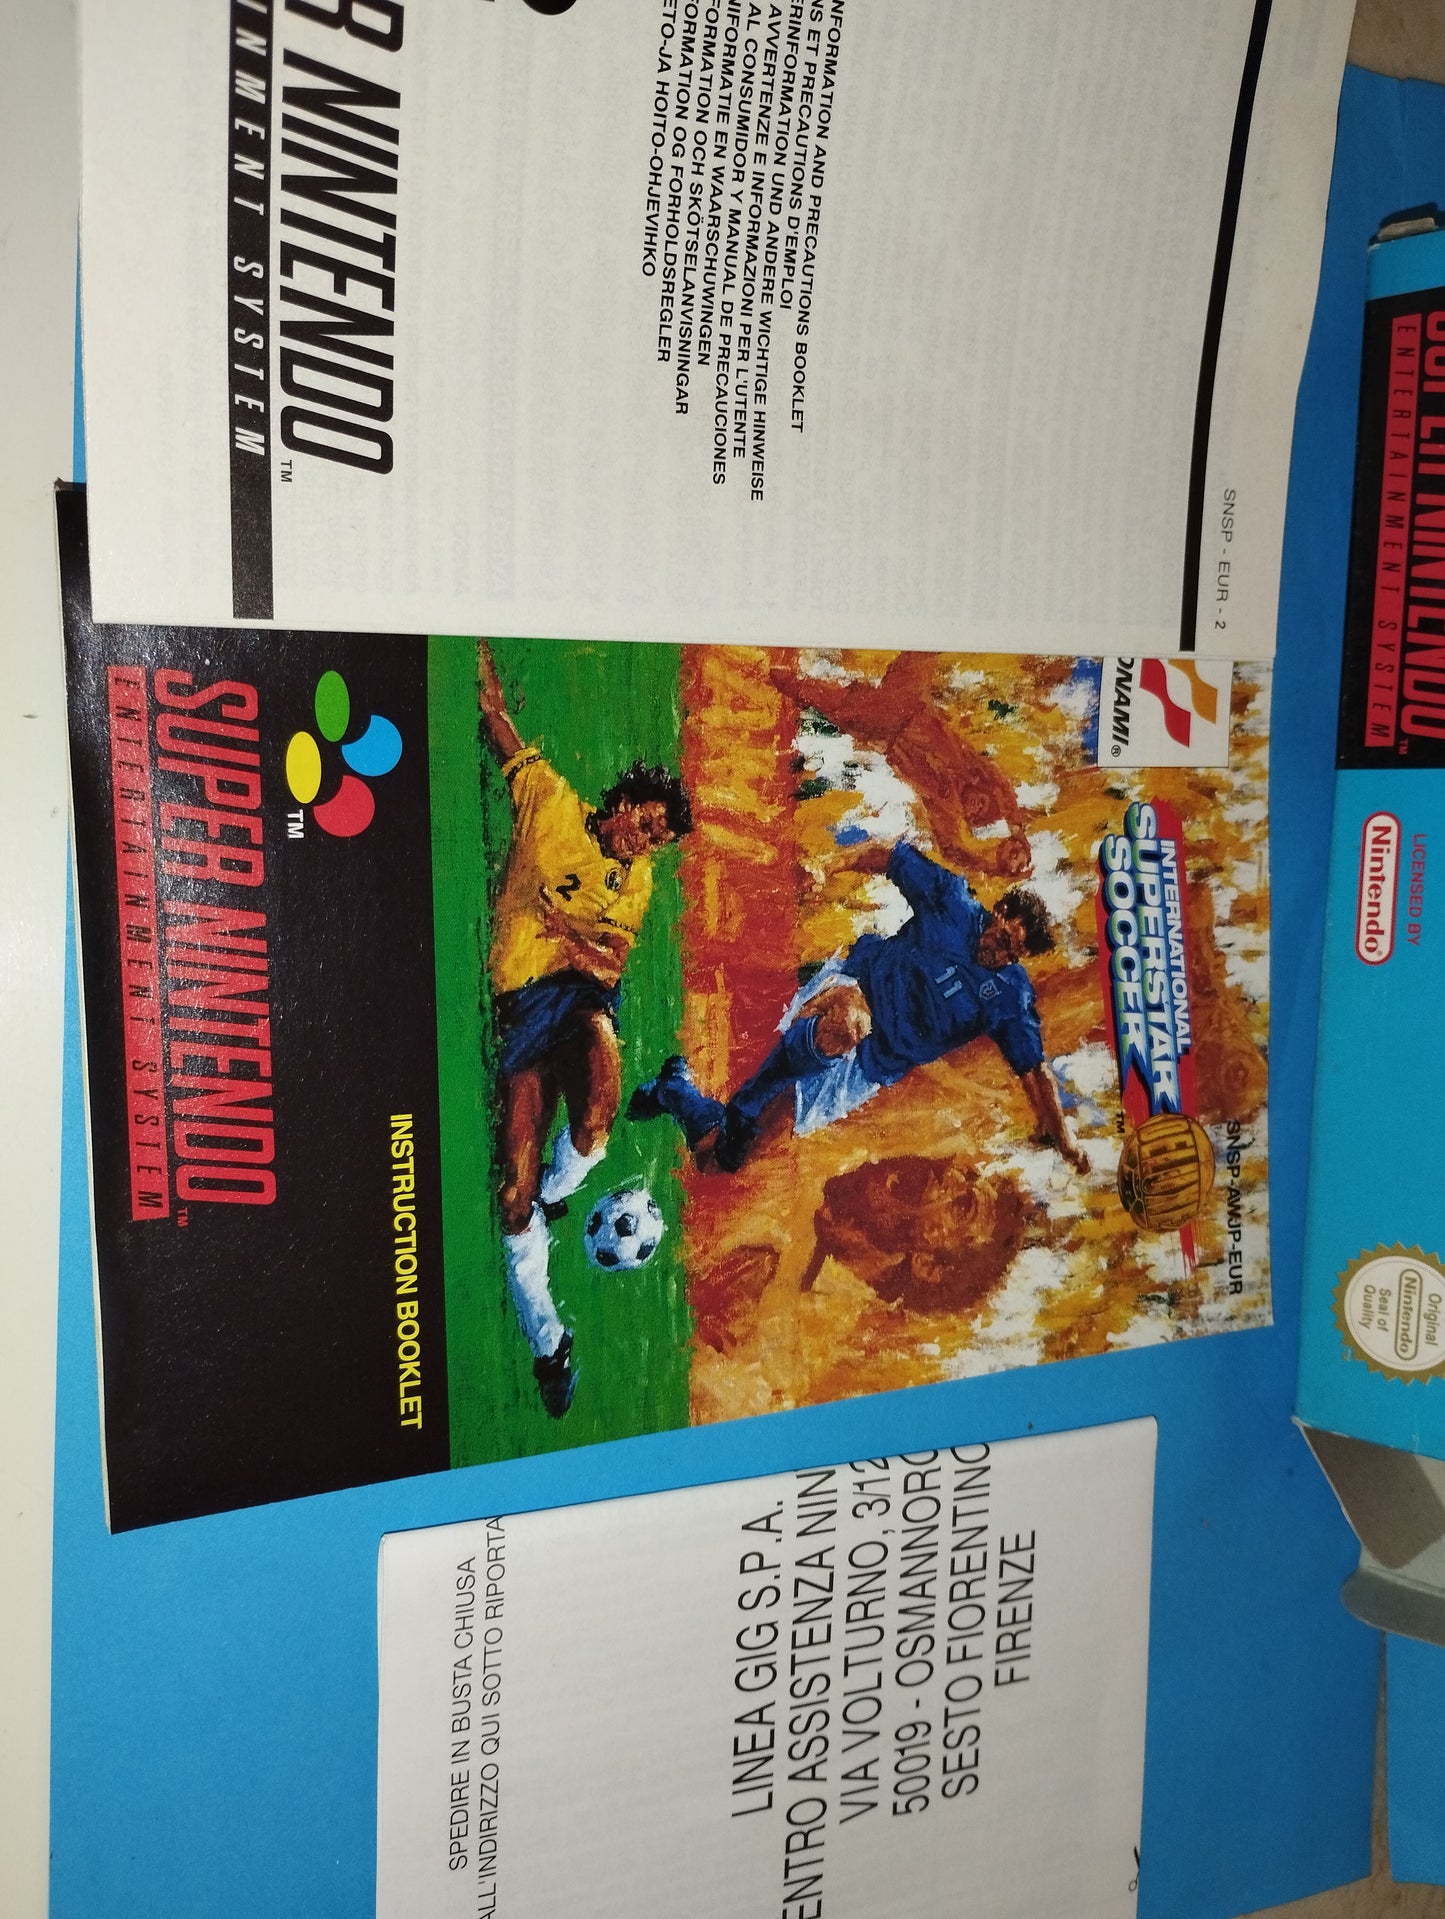 Super Nintendo Gioco International Superstar Soccer Deluxe
Edito nel 1995